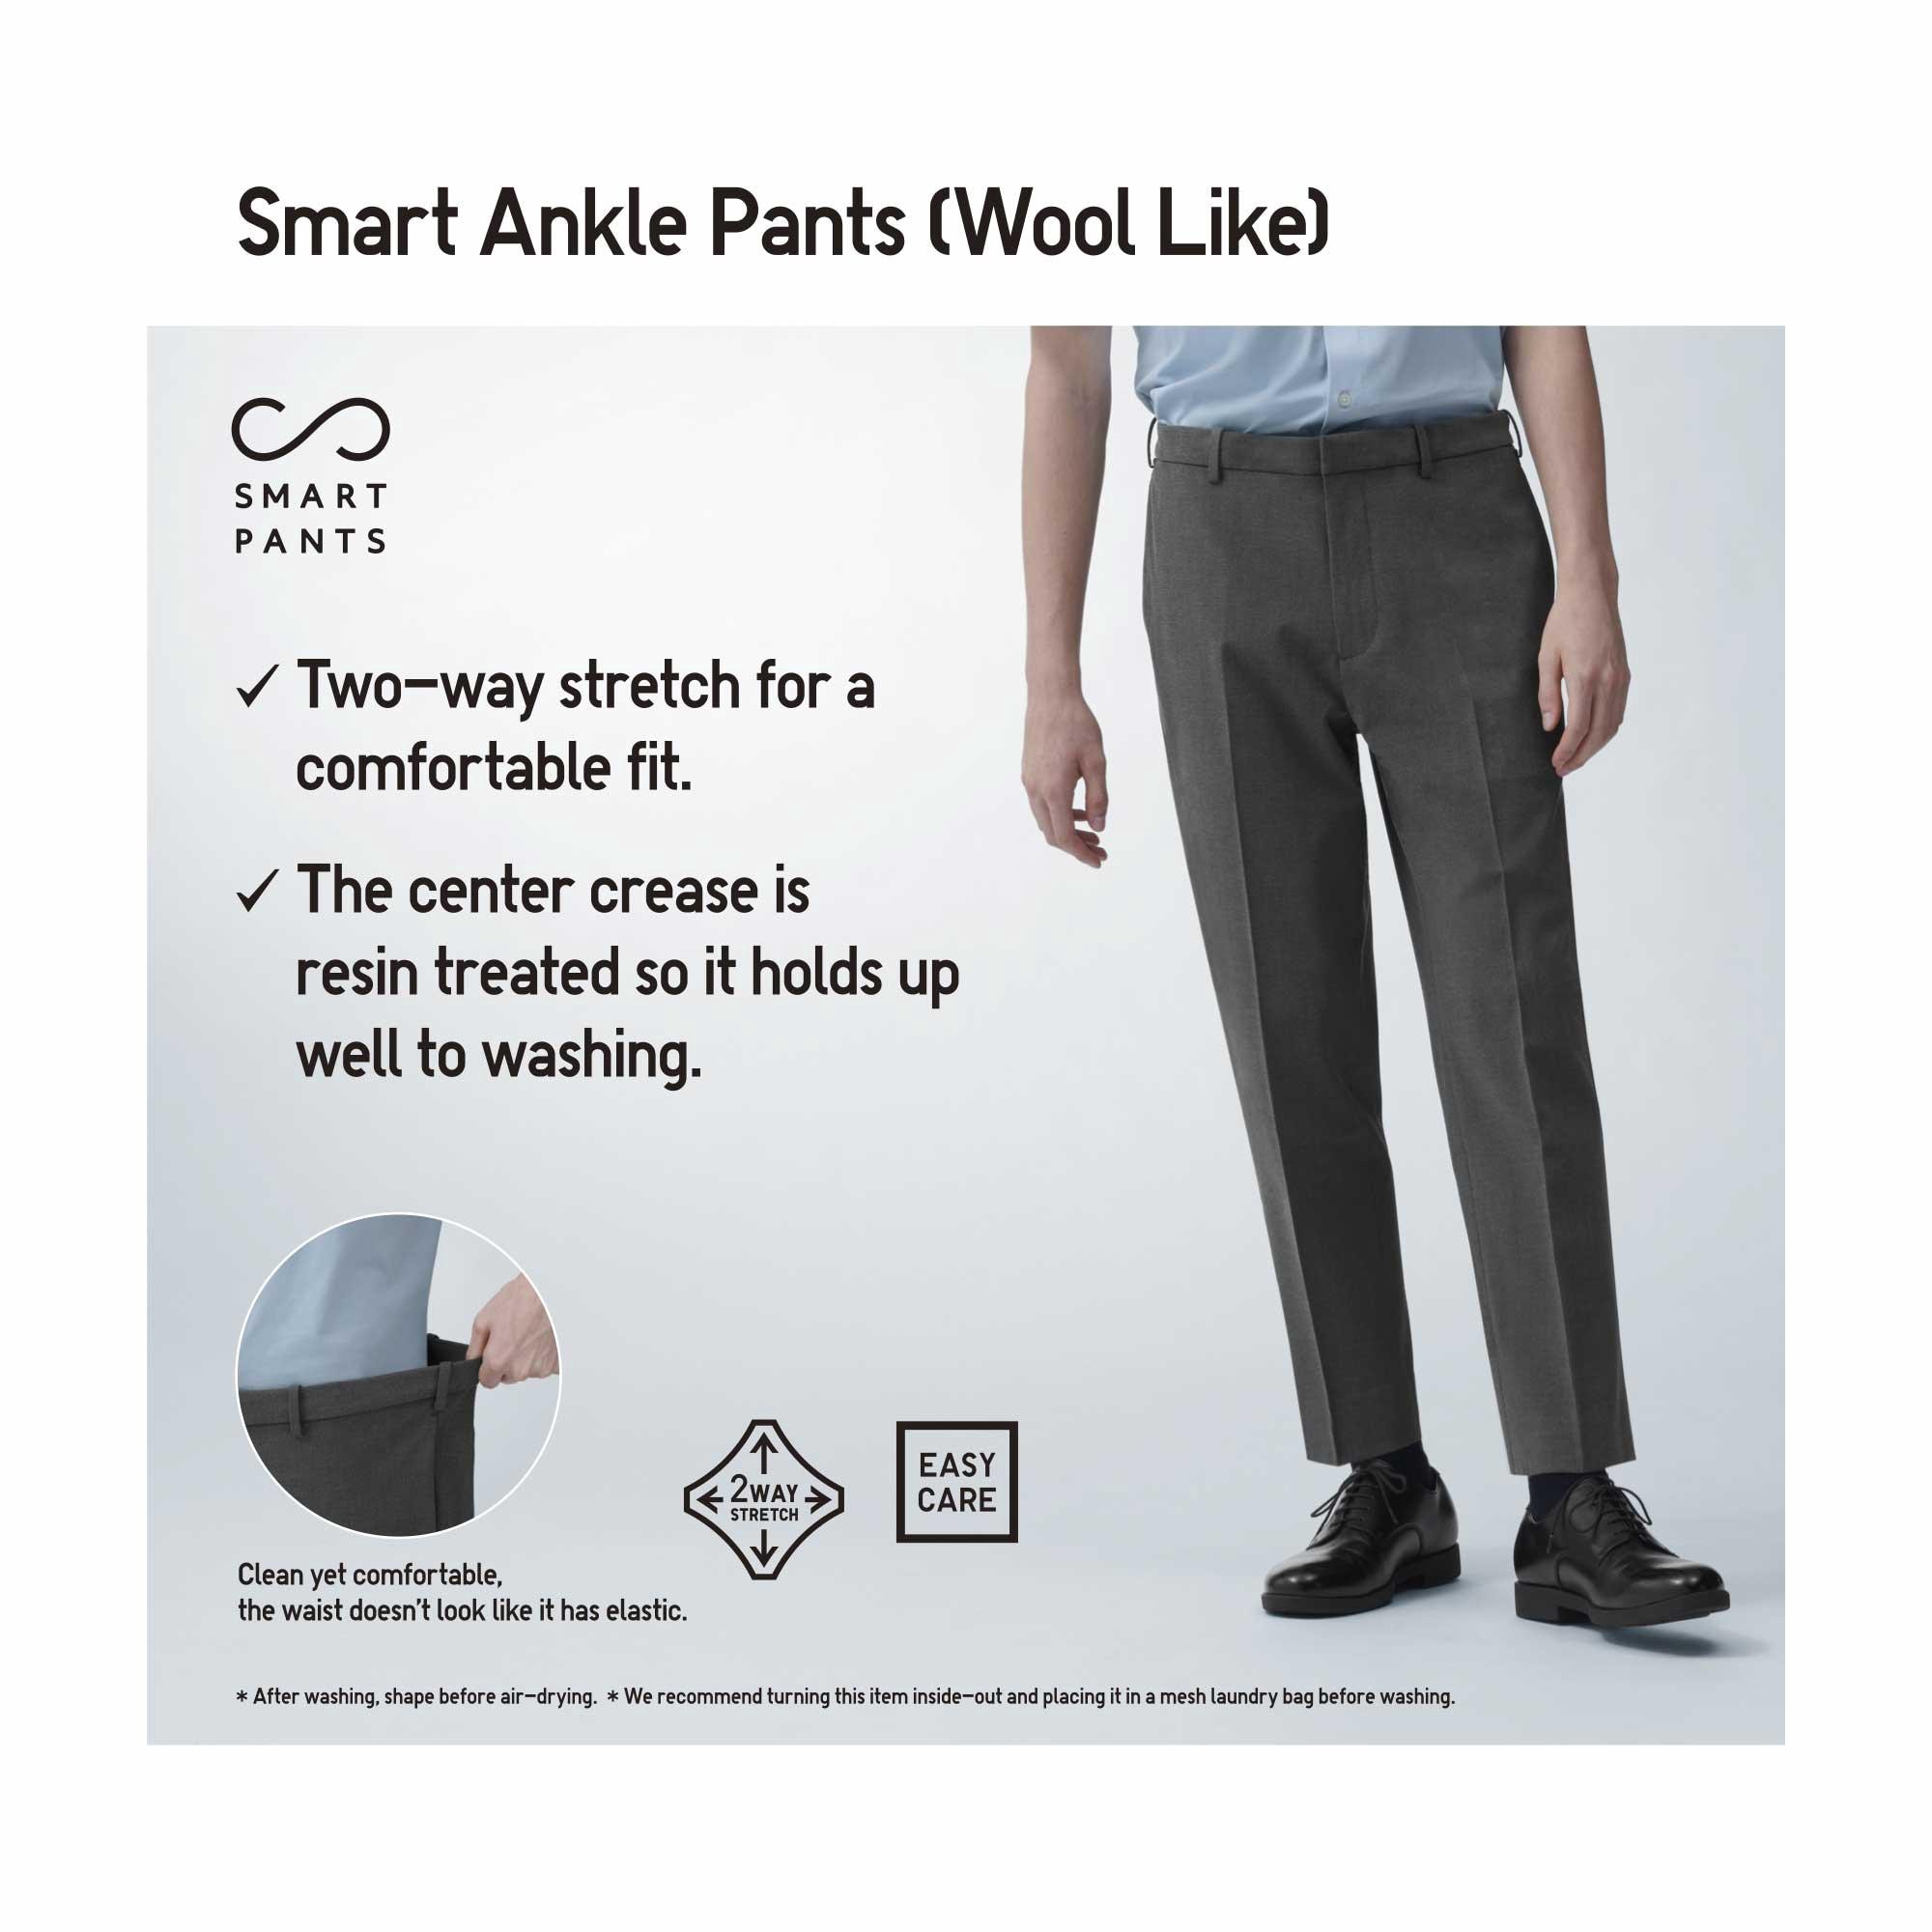 MEN'S SMART ANKLE PANTS (GUNCLUB CHECK) | UNIQLO PH